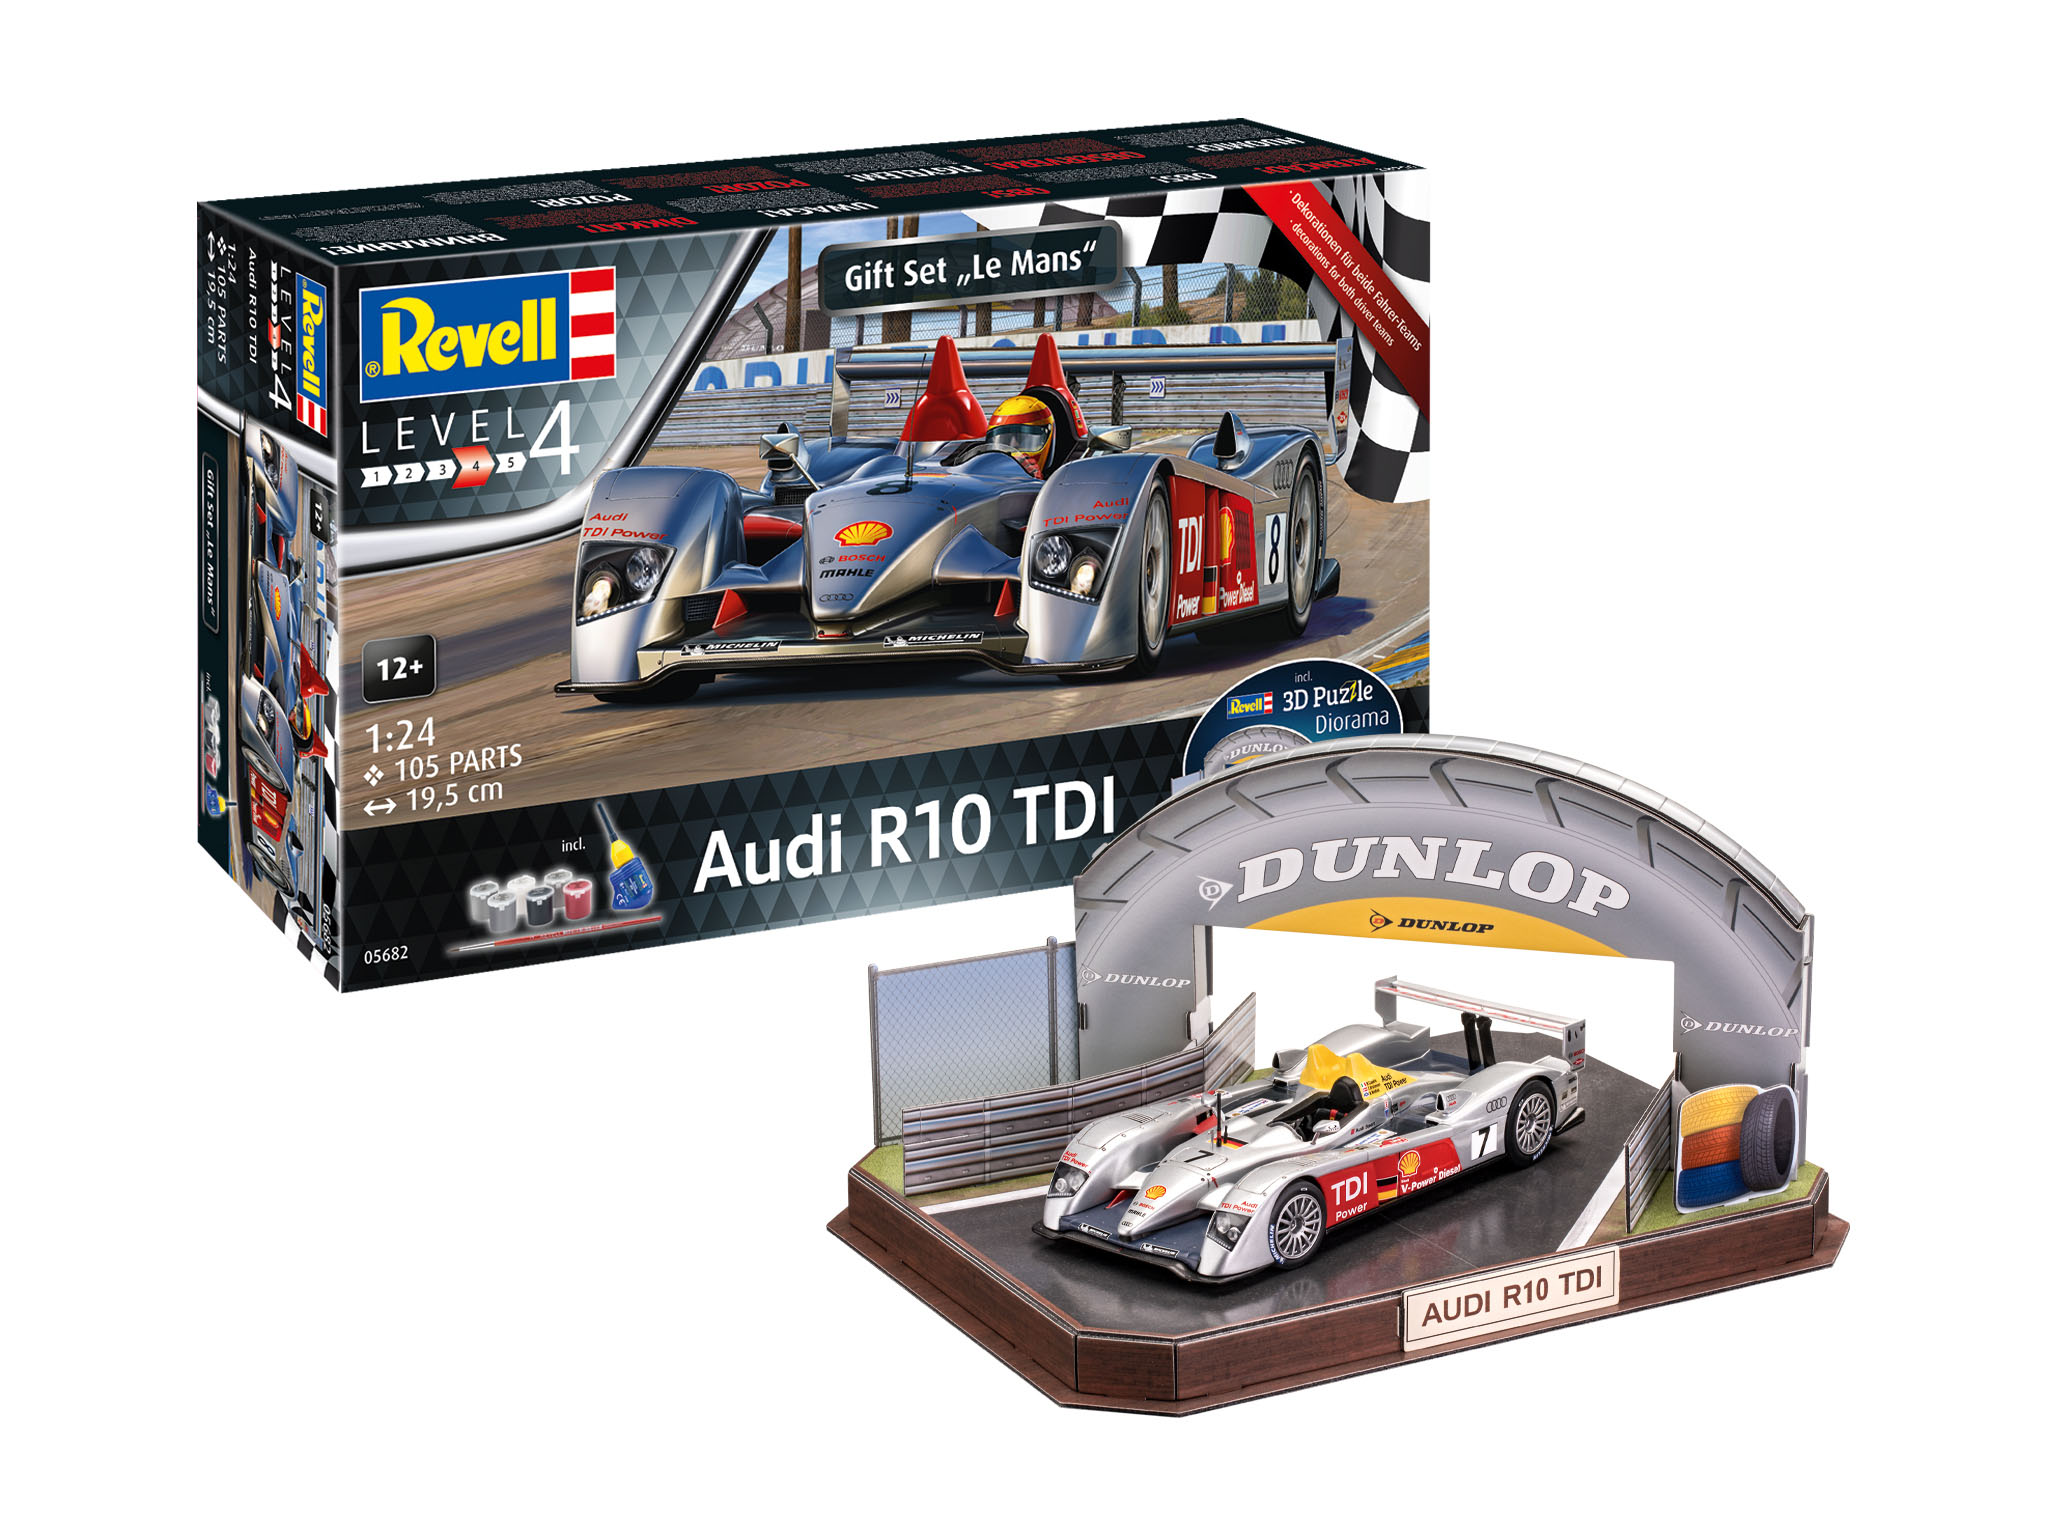 1/24 Gift Set Audi R10 TDI Le Mans + 3D Puzzle Diorama